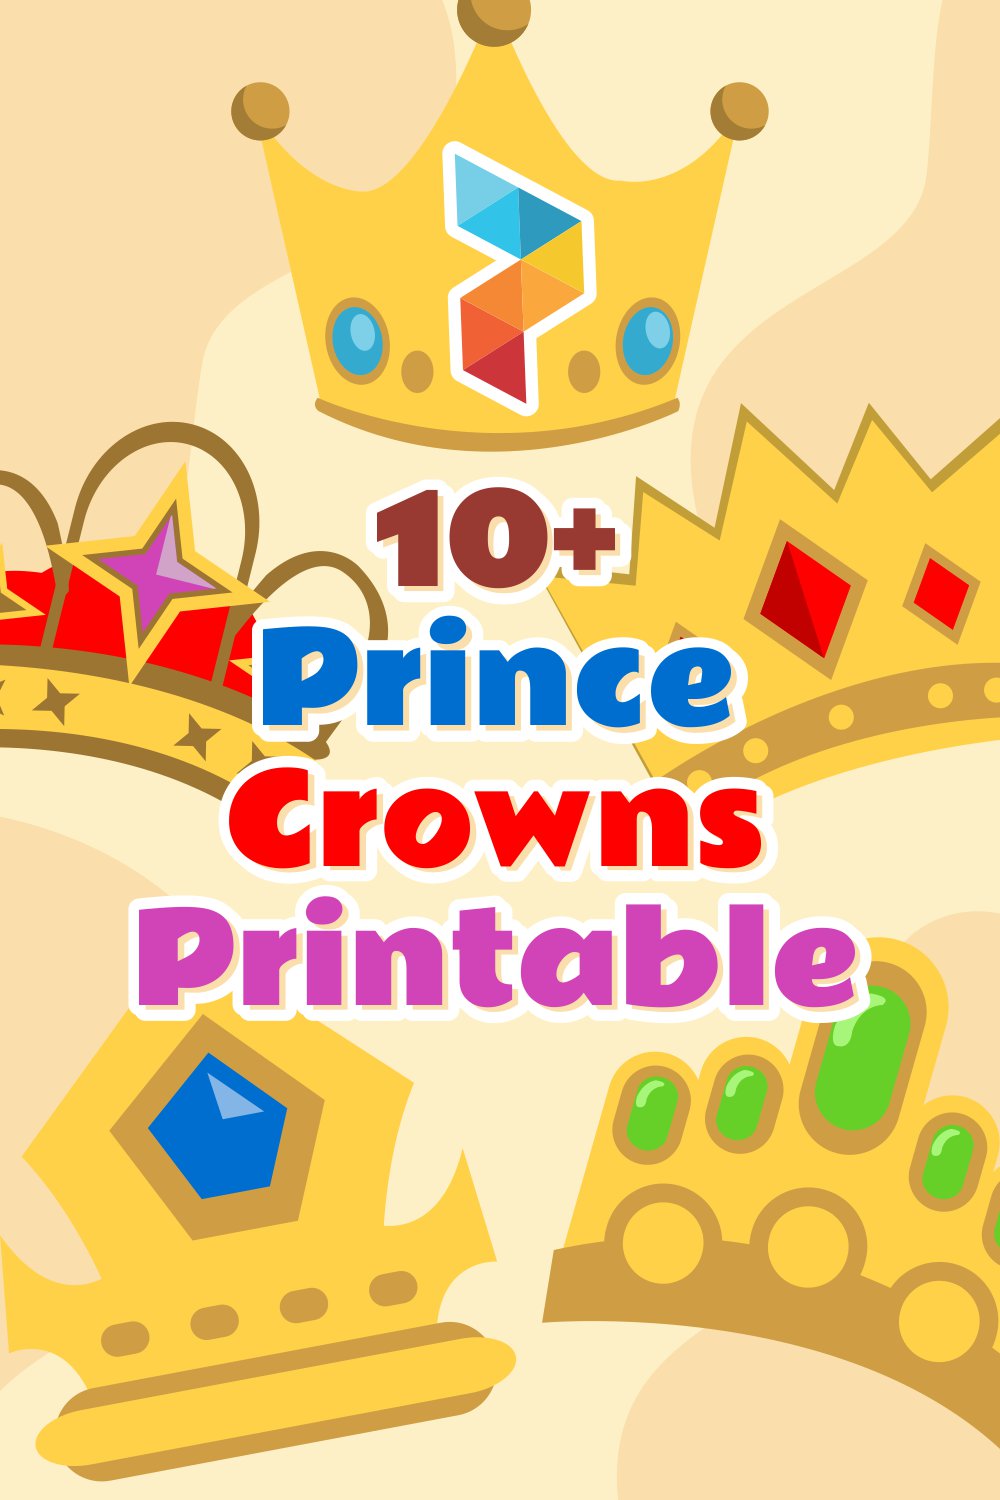 Prince Crowns